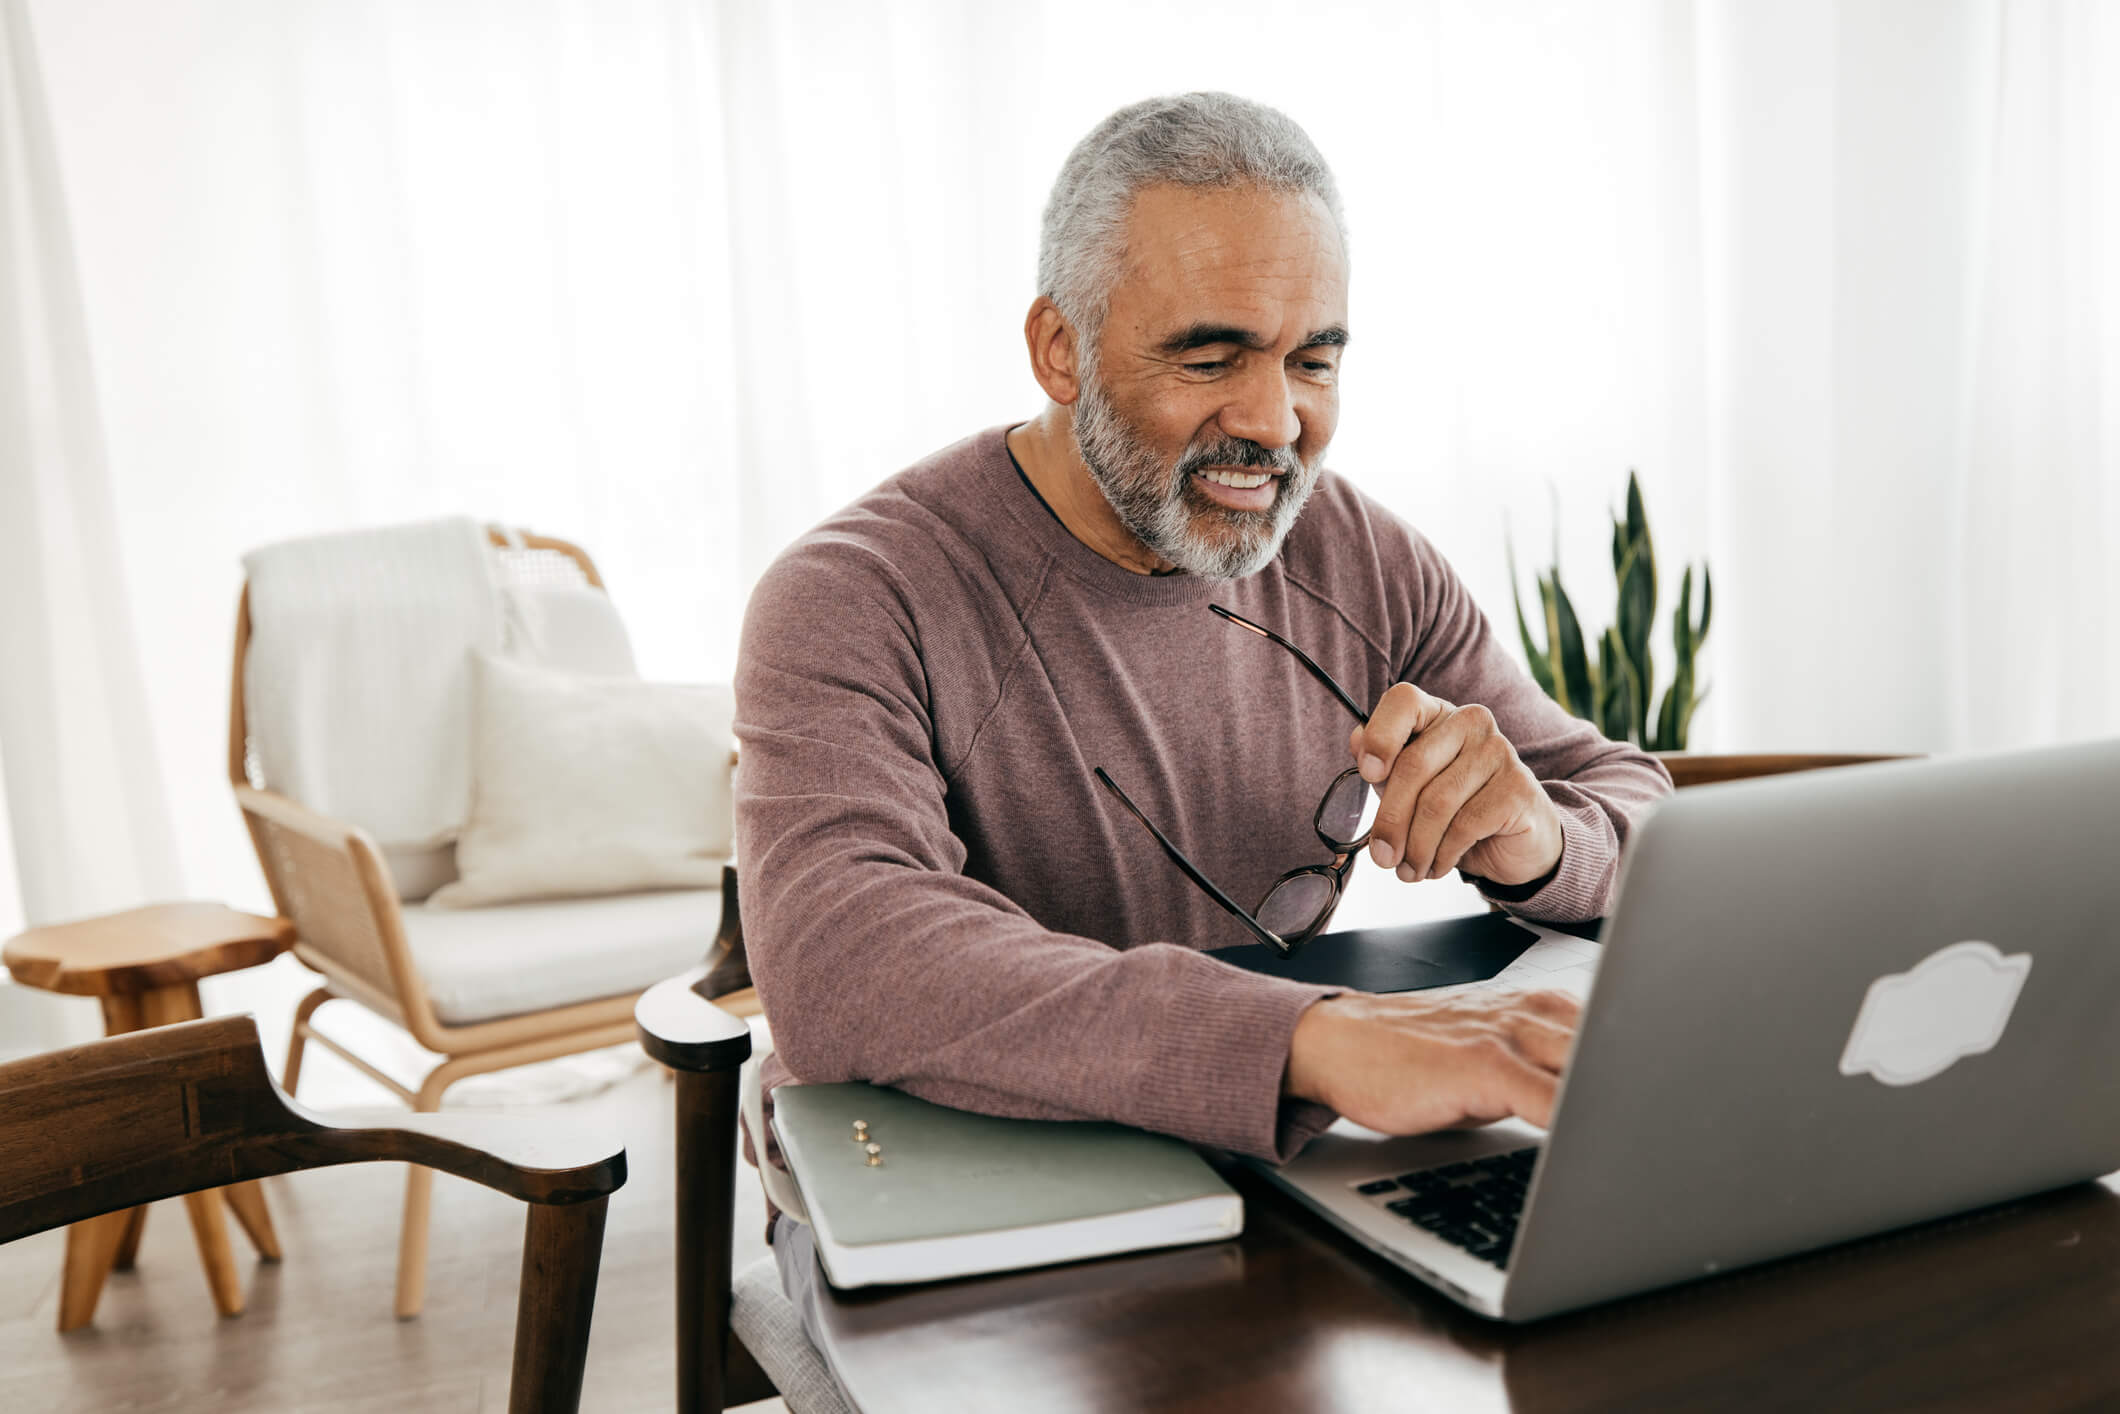 A man smiling at his laptop.